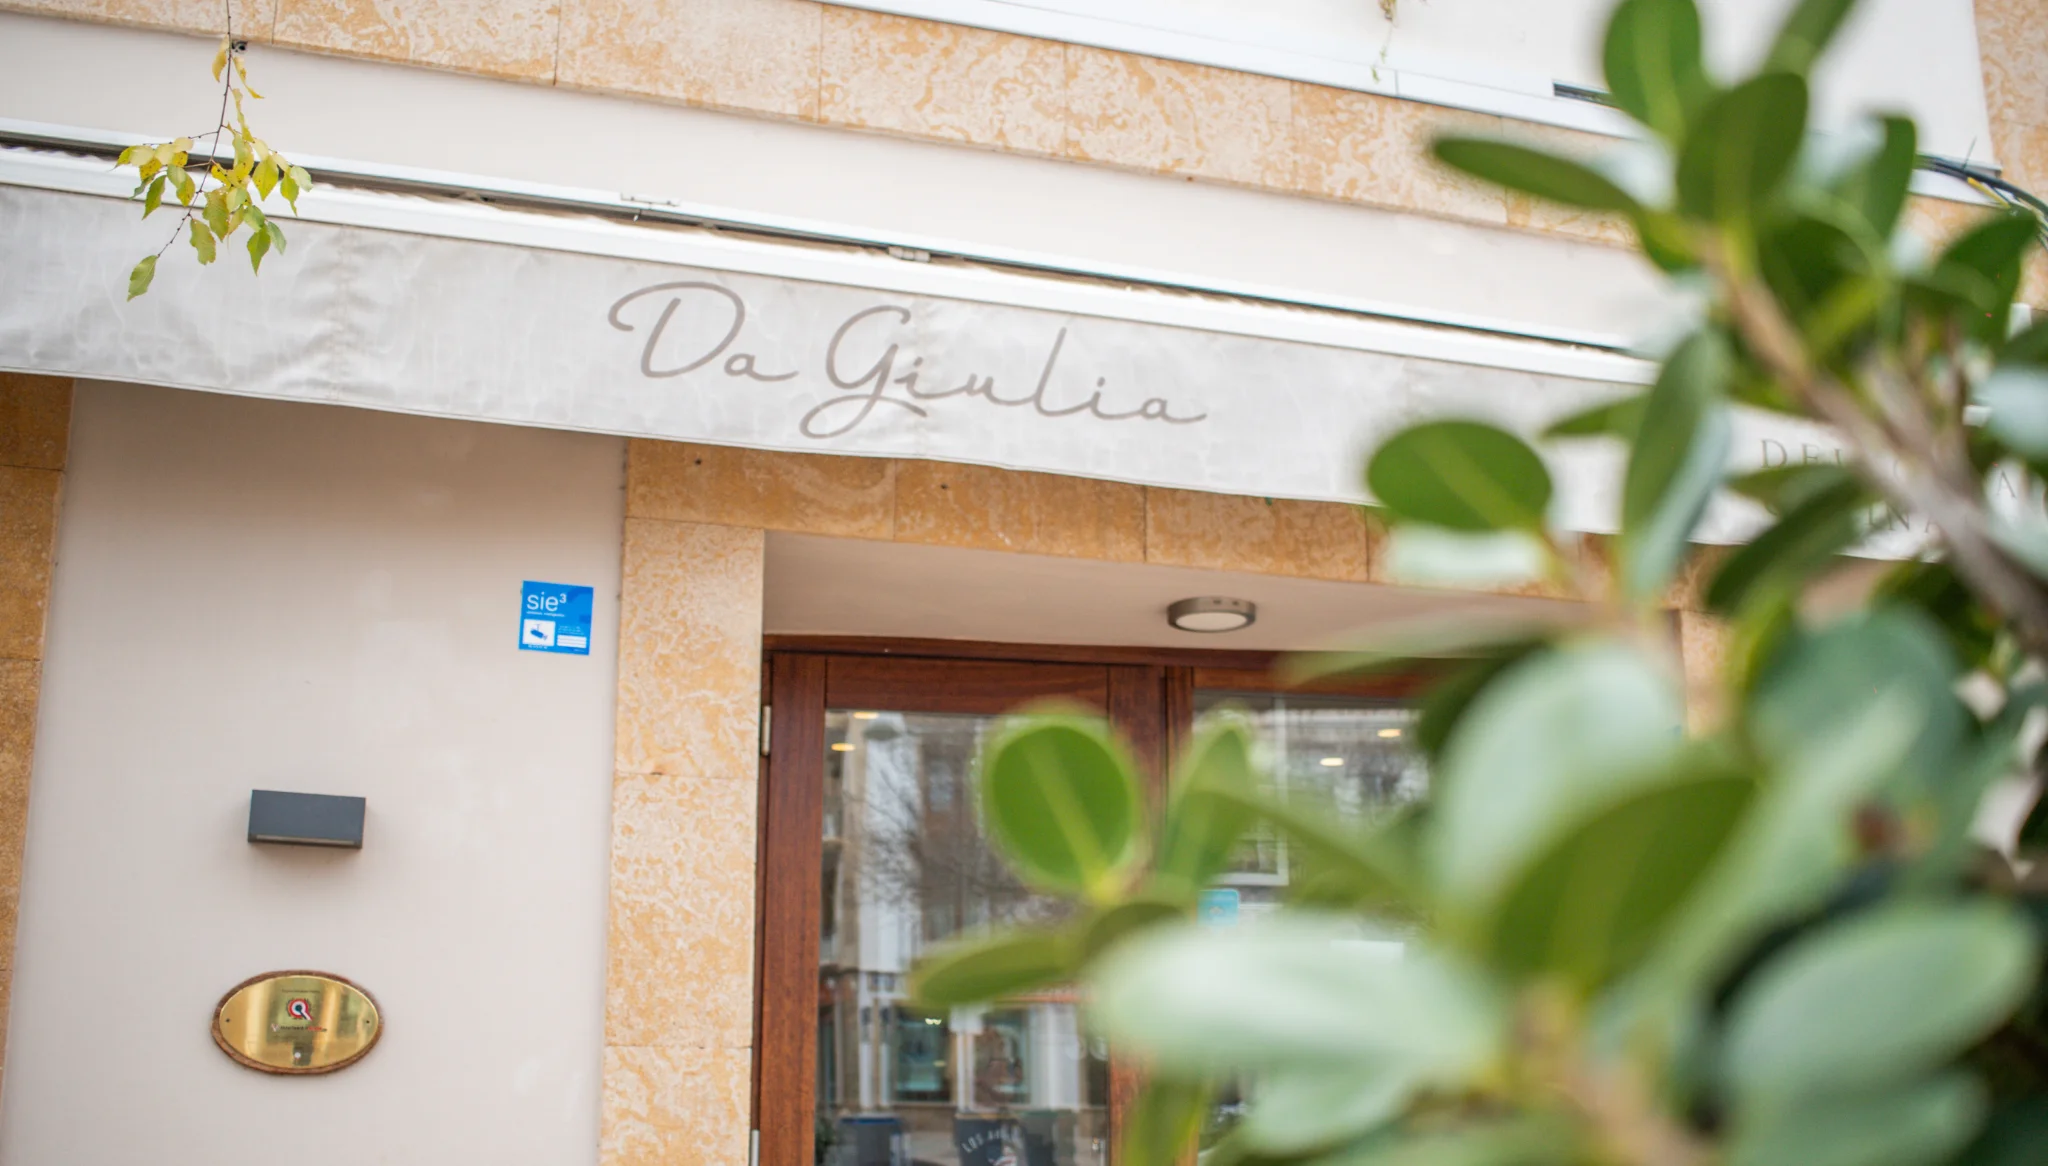 Restaurante de comida italiana – Restaurante Da Giulia